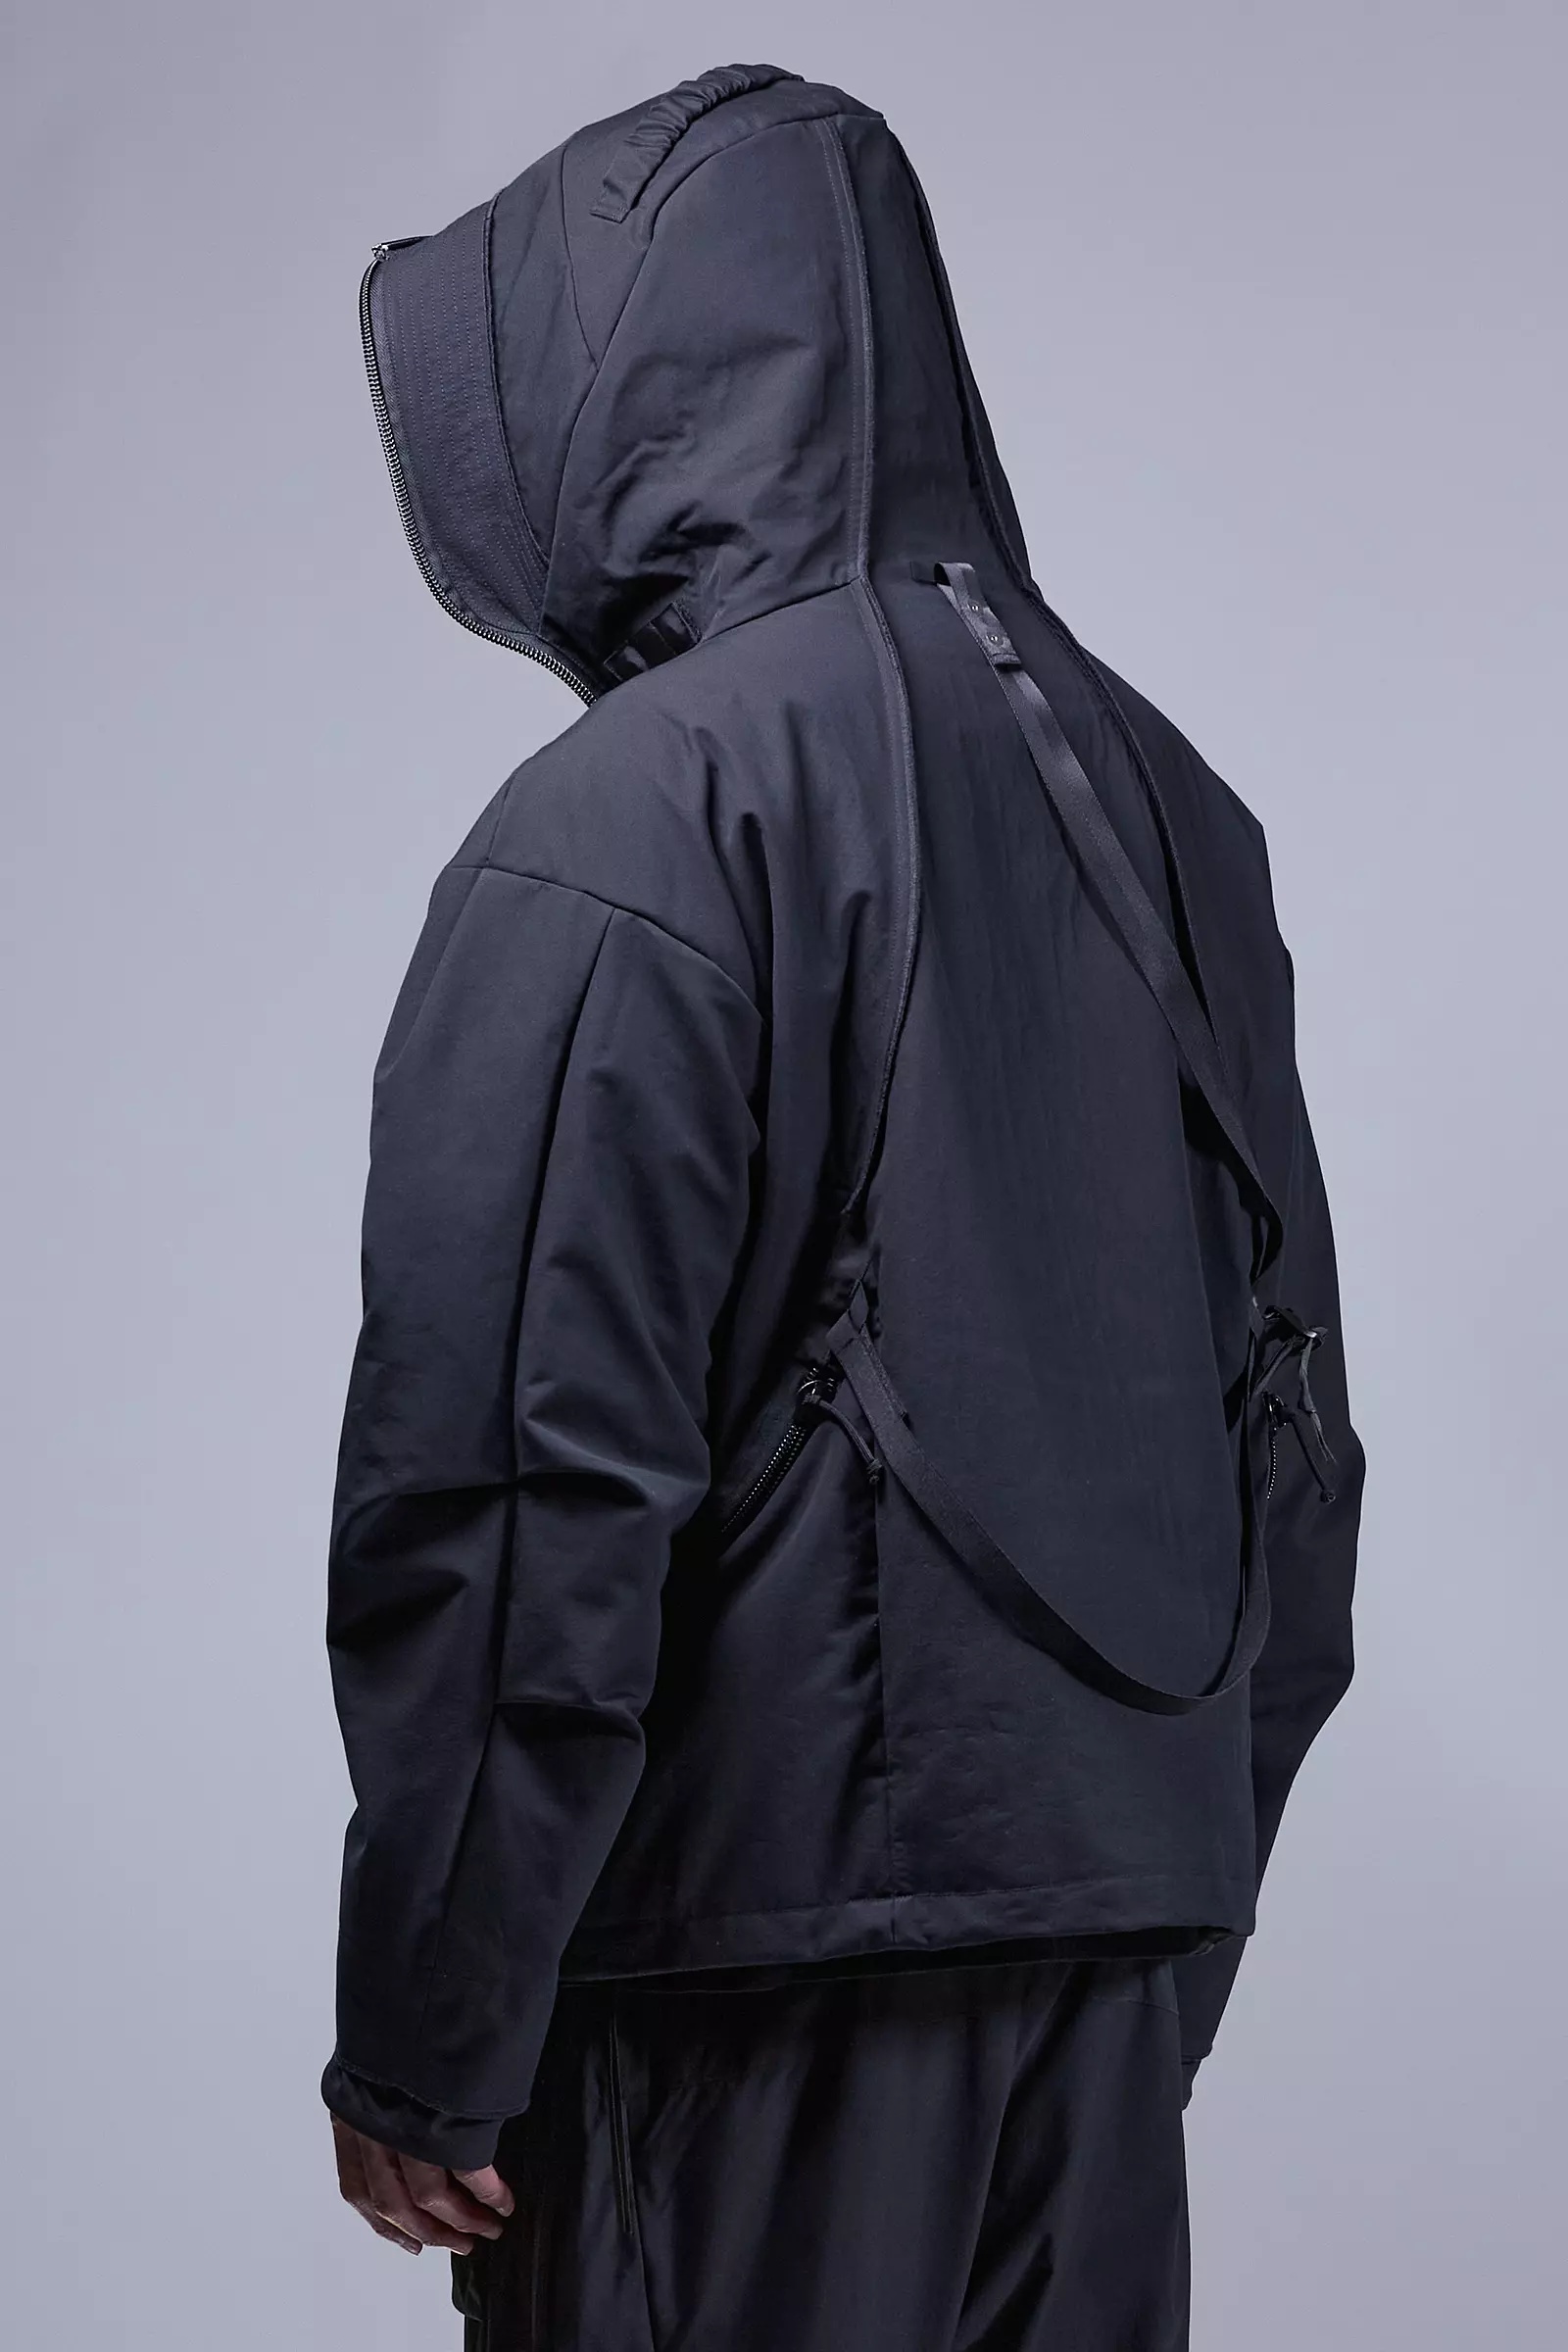 J113-SD Stotz® EtaProof™ Double Layer Weave Jacket Black - 7